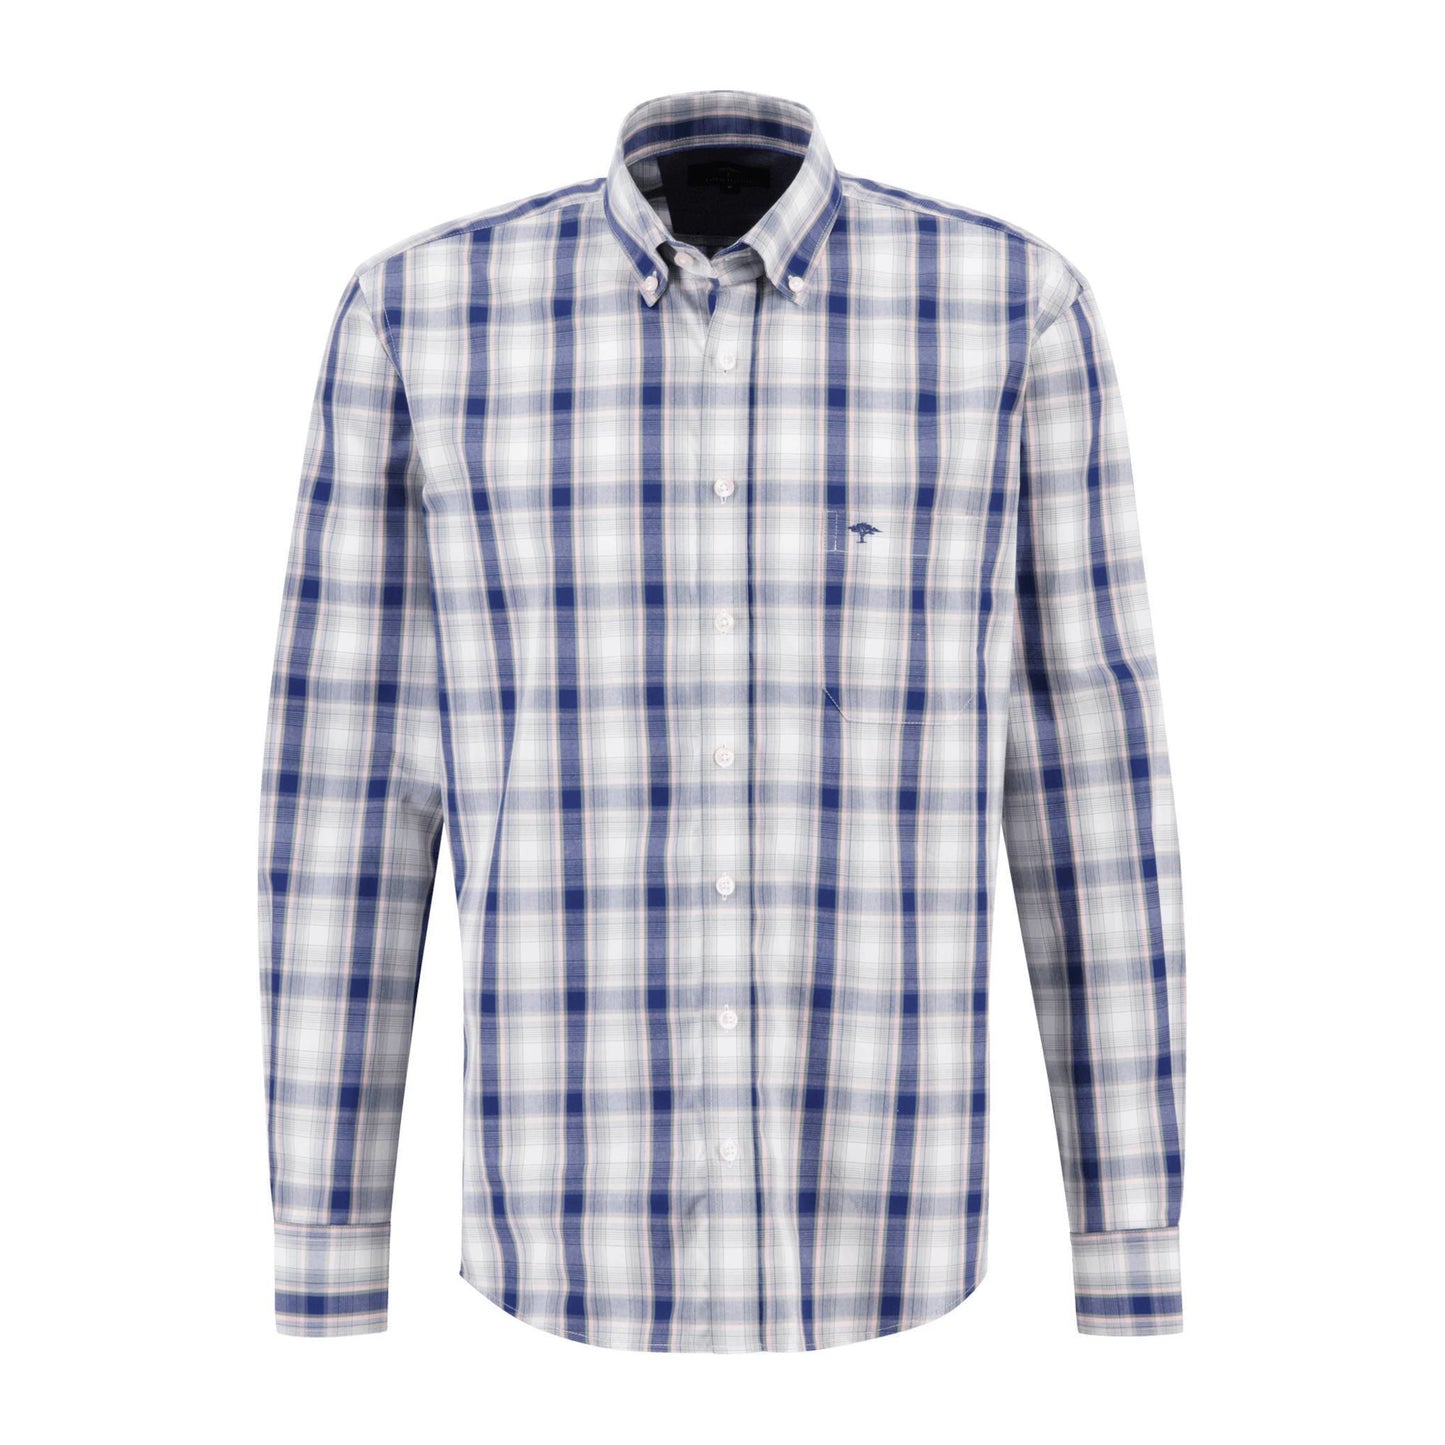 Fynch Hatton 13105010 403 Pale Berry Fond Check Long Sleeve Shirt